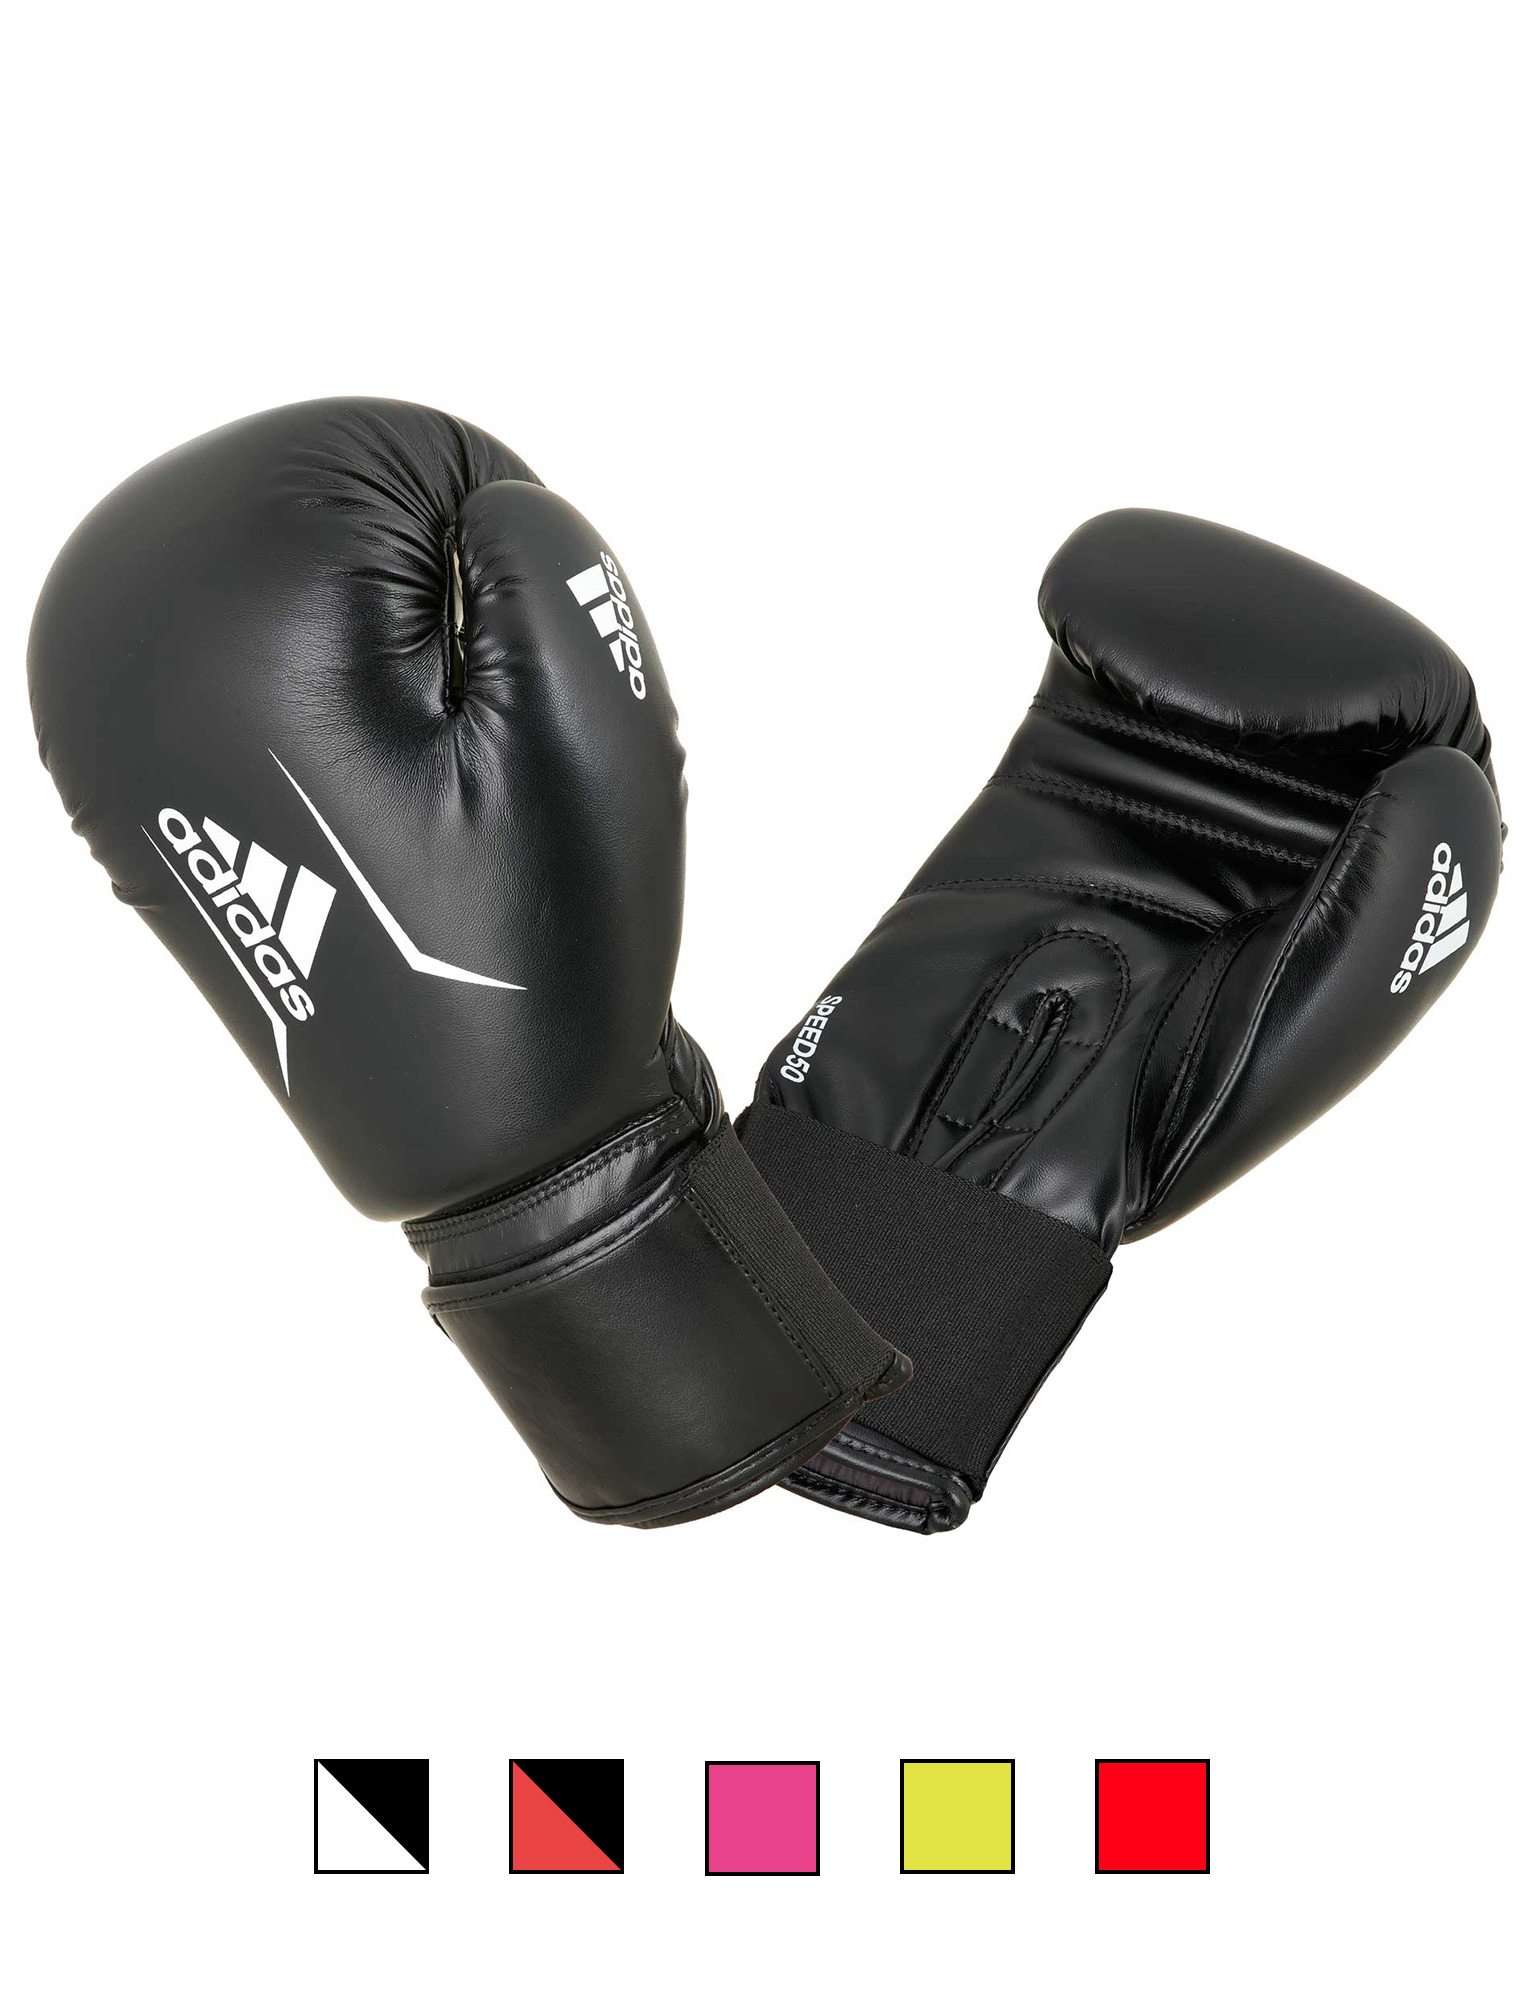 adidas boxing glove Speed 50 ADISBG50, black/white